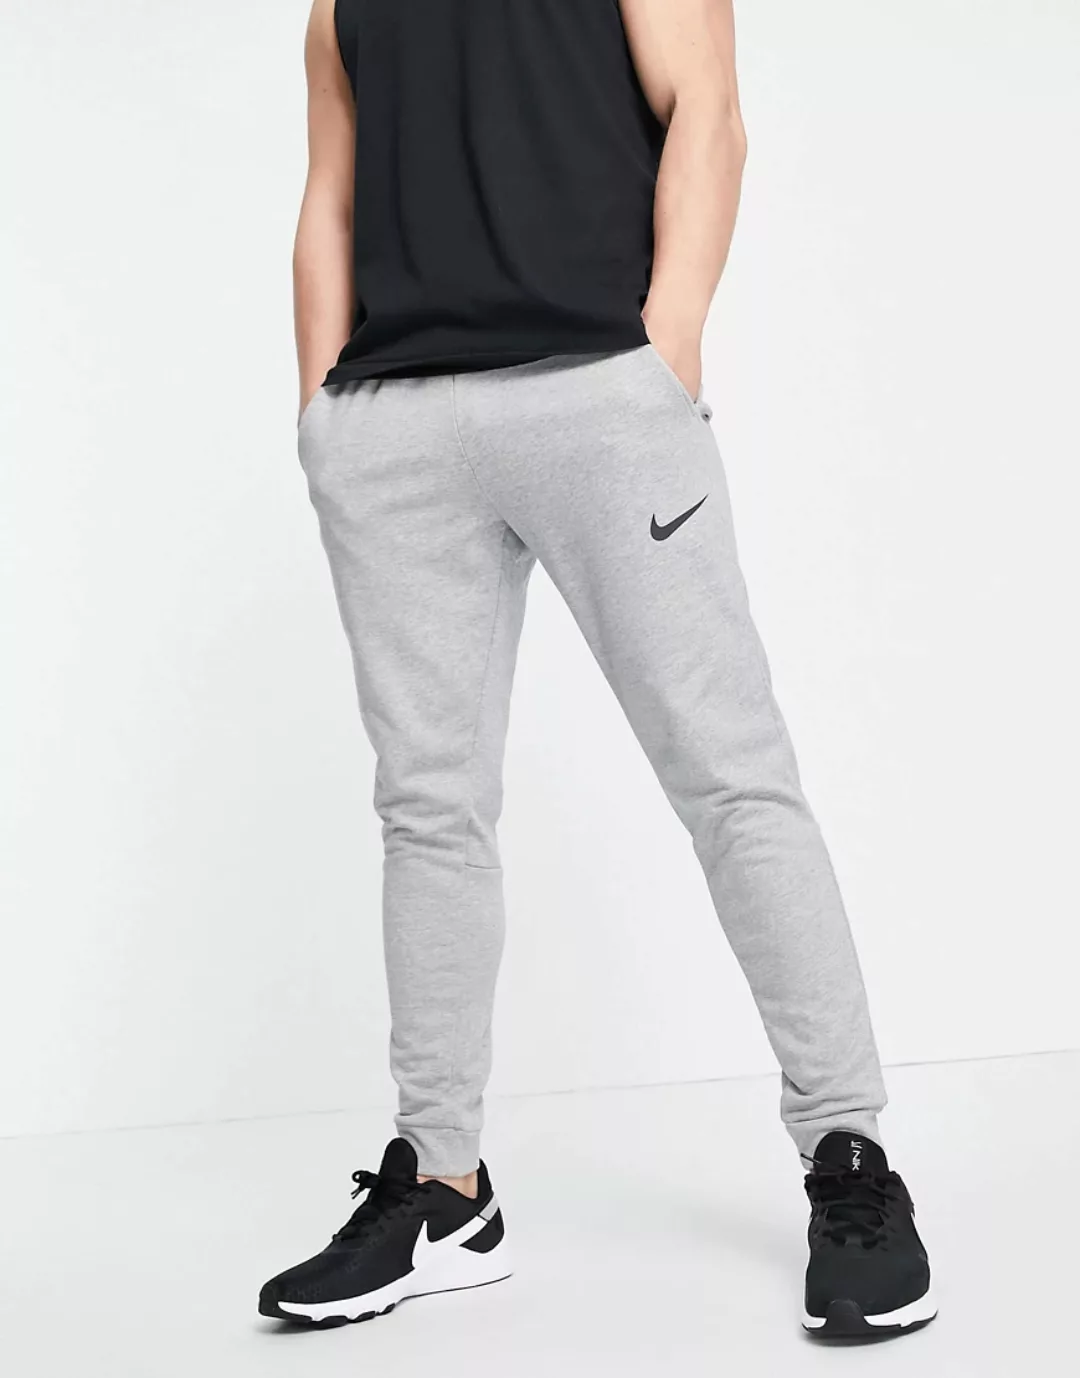 Nike Training – Dri-FIT – Schmal zulaufende Jogginghose in Hellgrau günstig online kaufen